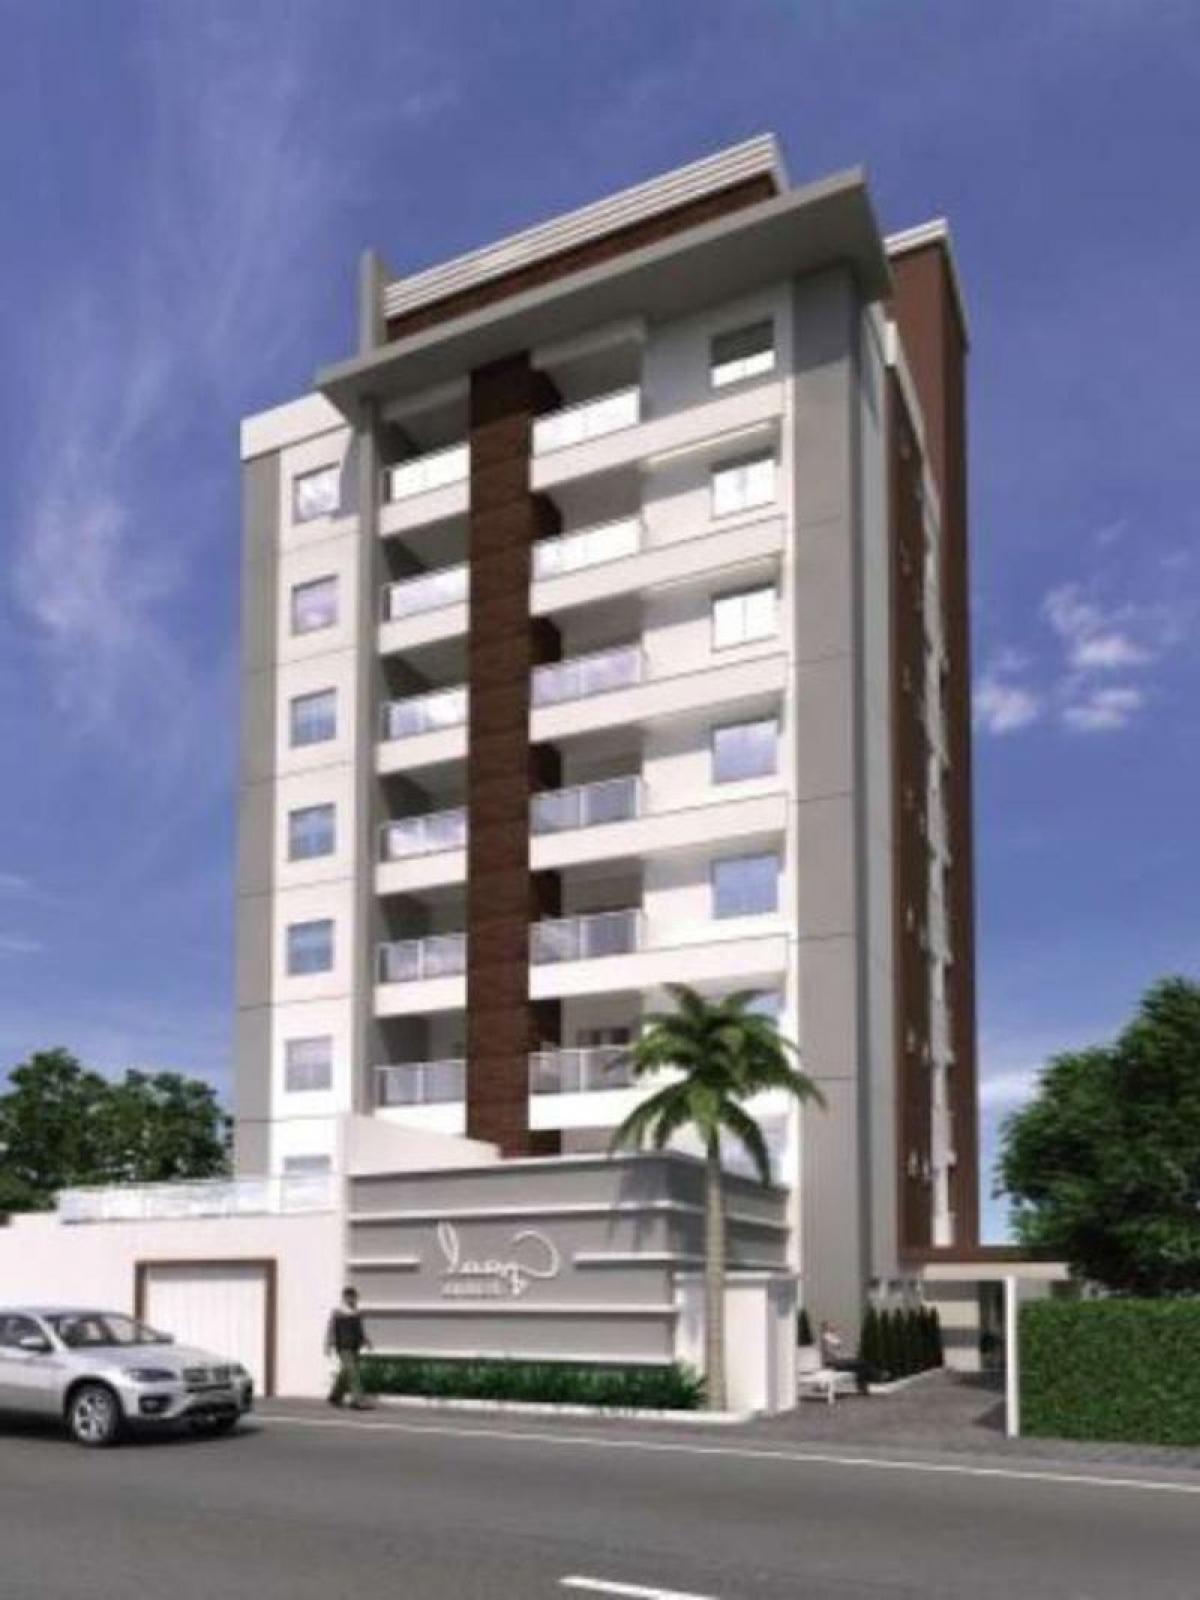 Picture of Apartment For Sale in Brusque, Santa Catarina, Brazil